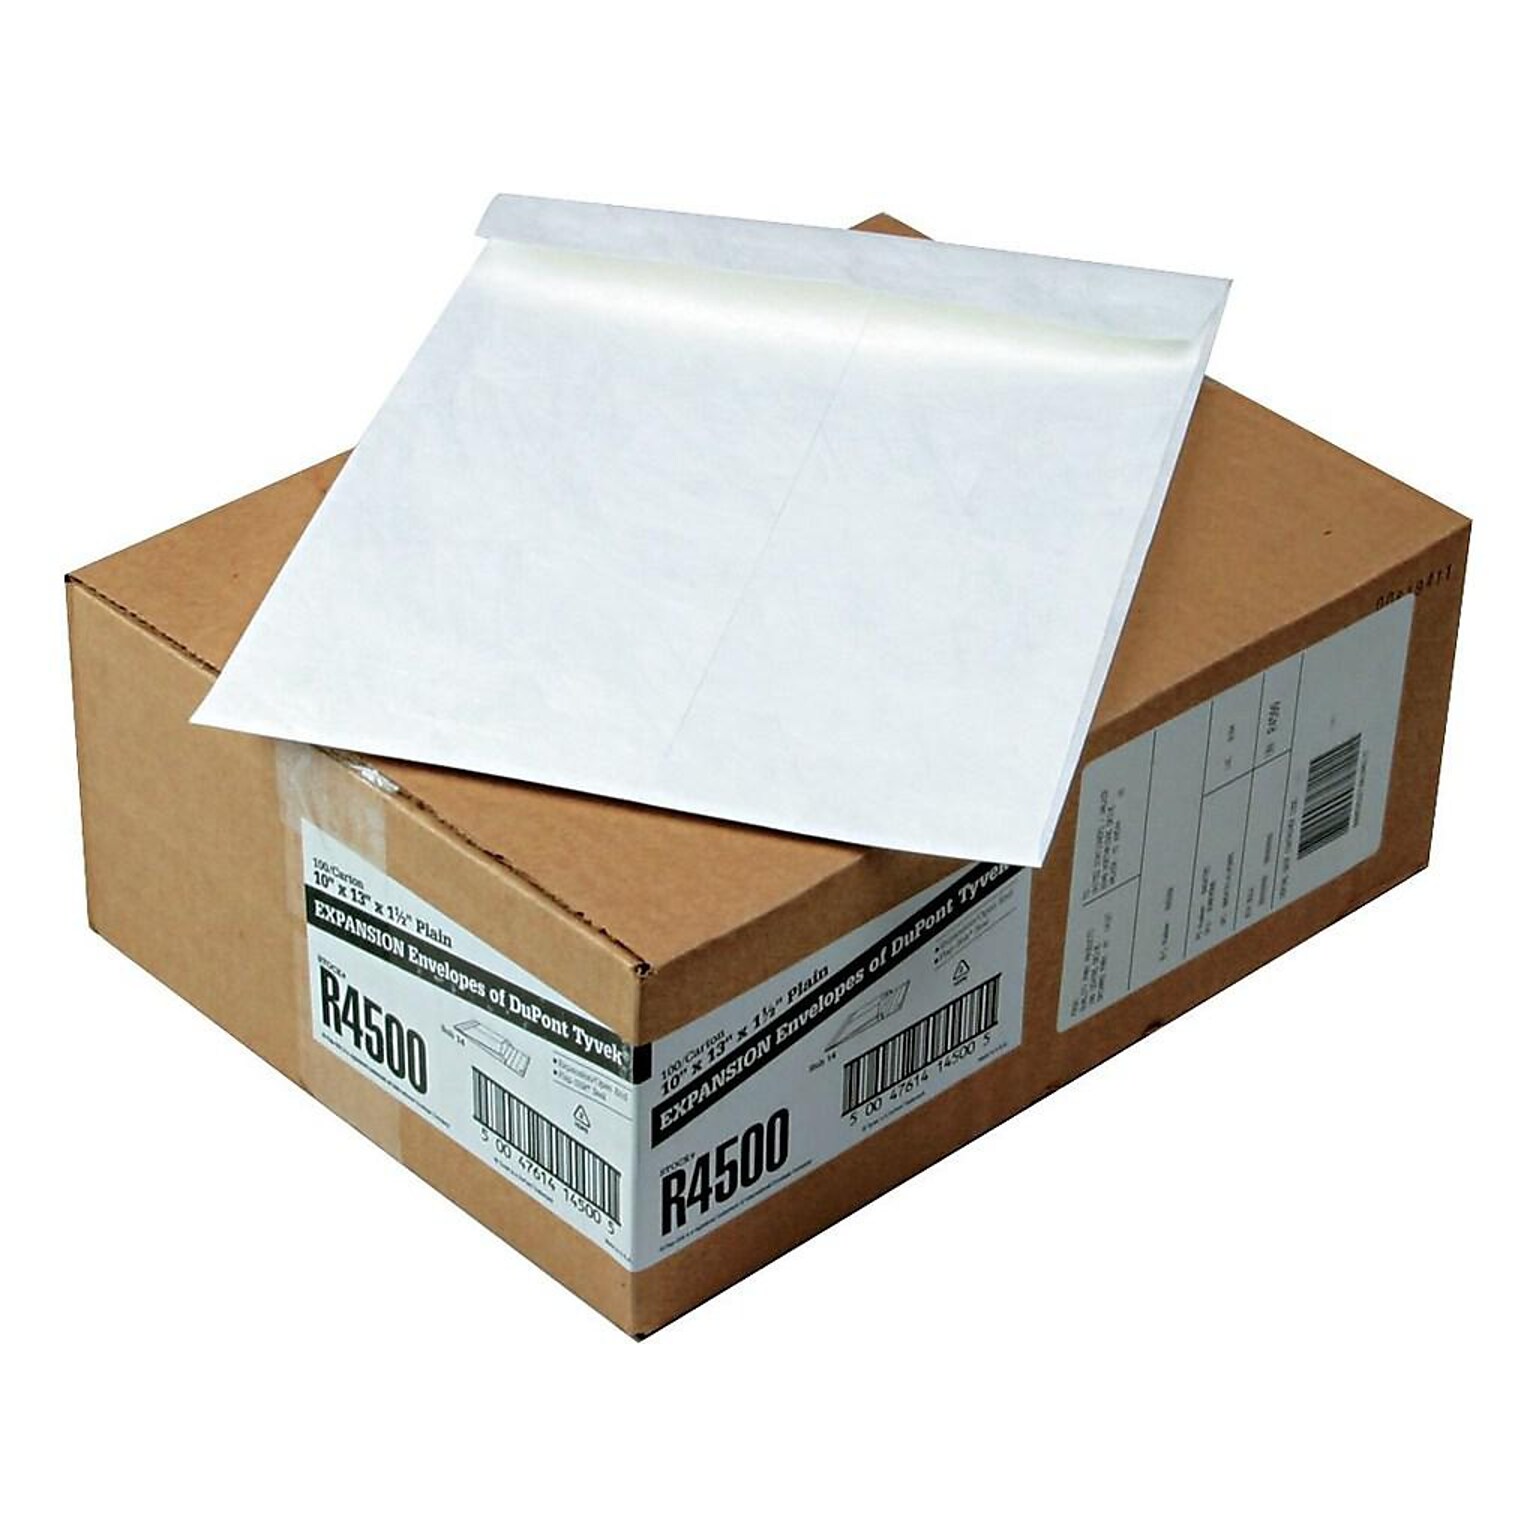 Quality Park Survivor Tyvek Expansion Self Seal Catalog Envelopes, 10 x 13, White, 100/Carton (QUAR4500)